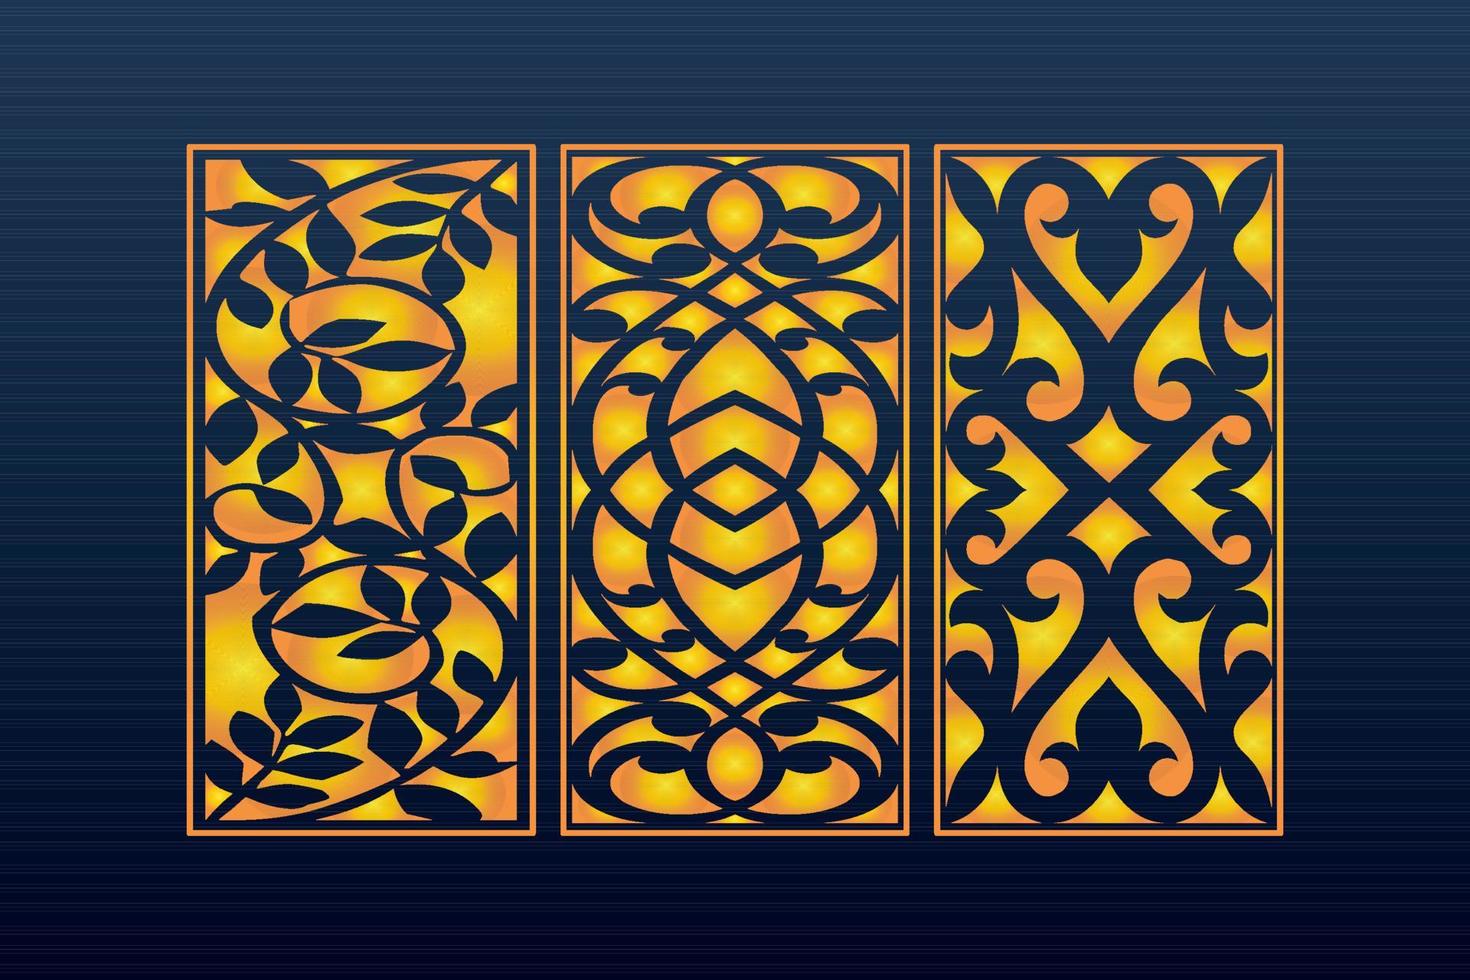 Decorative Abstract Geometric islamic Background Elegant Ornaments Card Cnc Cut vector